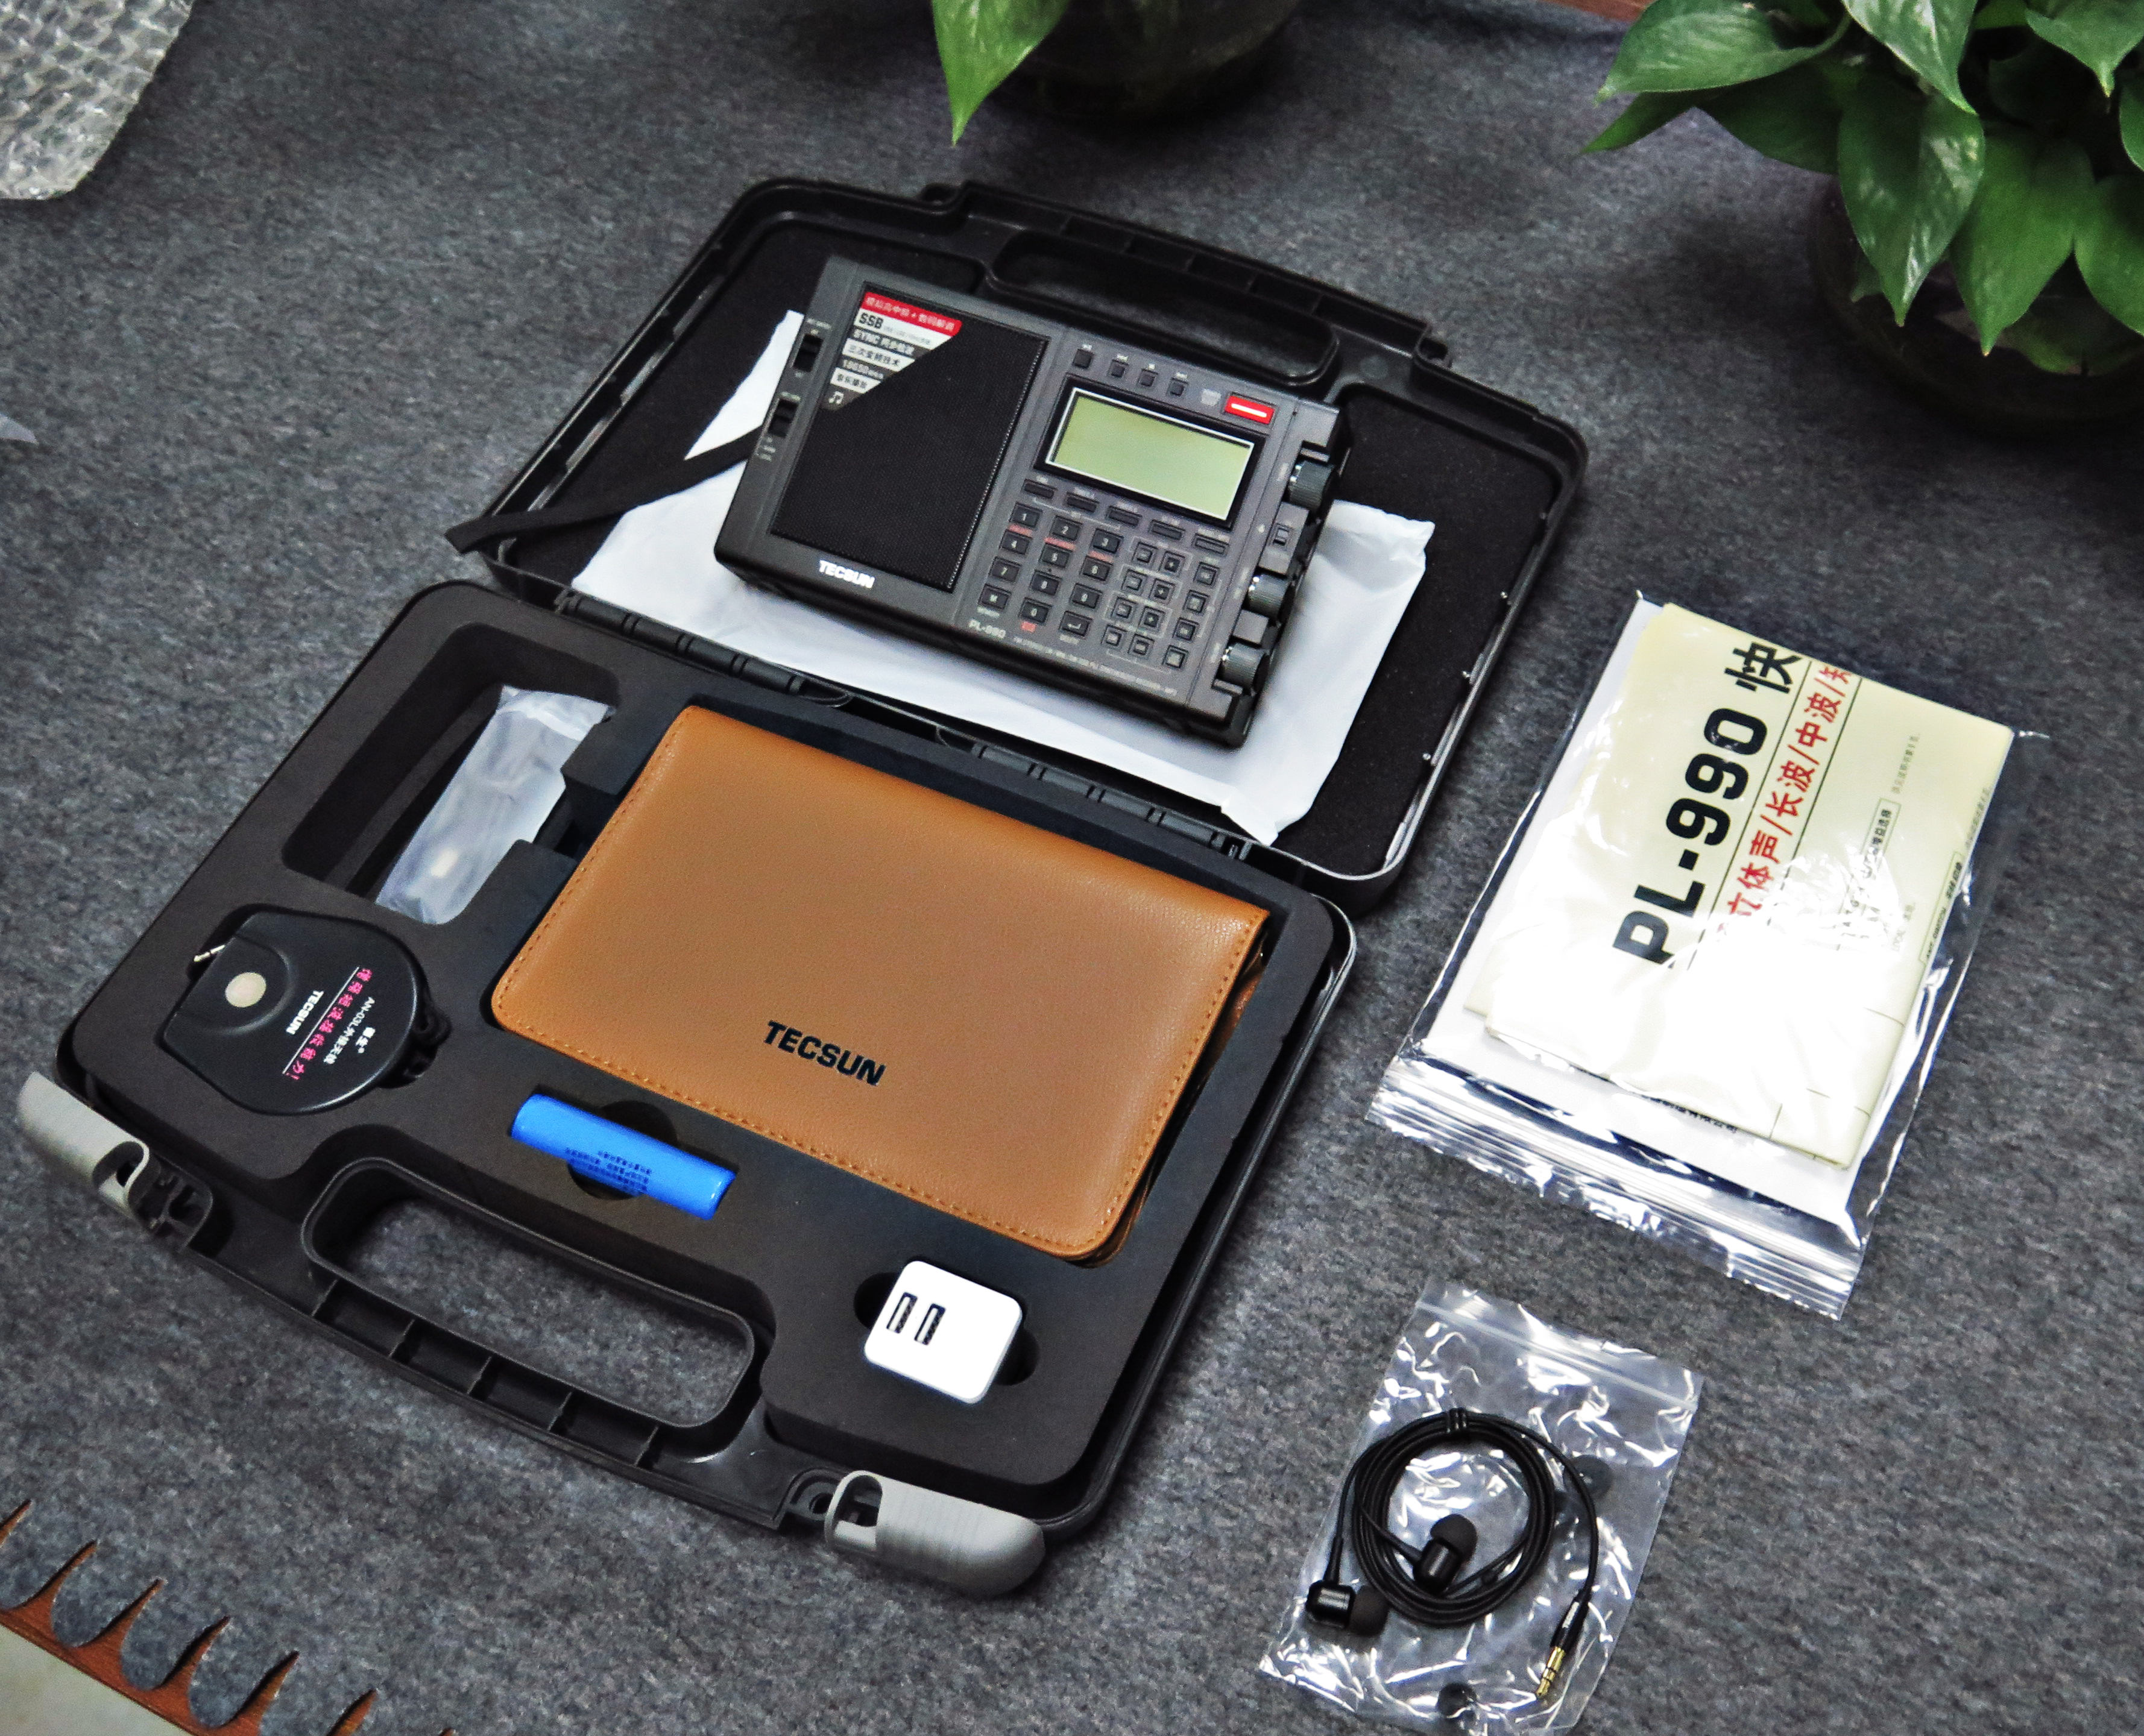 Tecsun pl-990 portable radio receiver all-band single sideband digital tuning FM radio with English User Manual